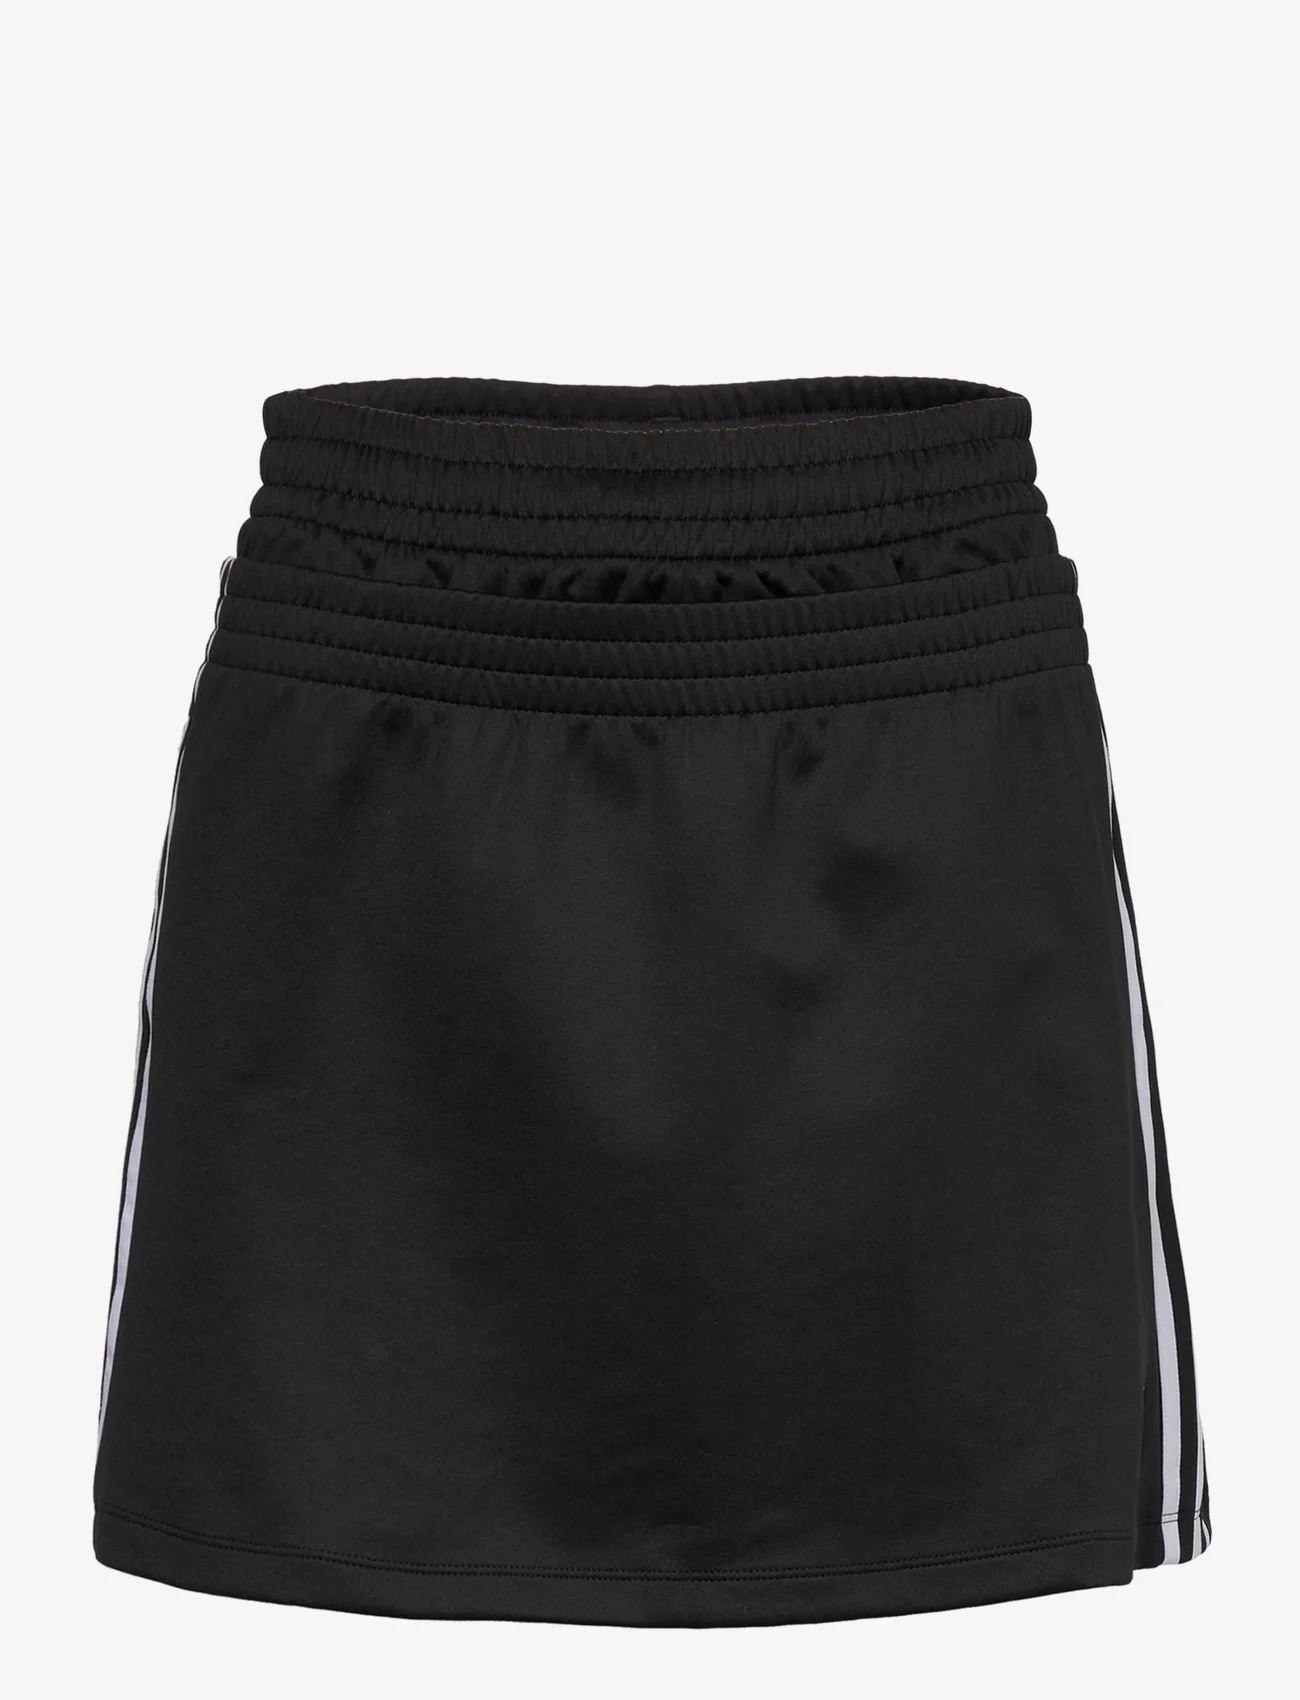 adidas Originals - Always Original Skirt - nederdele - black - 0